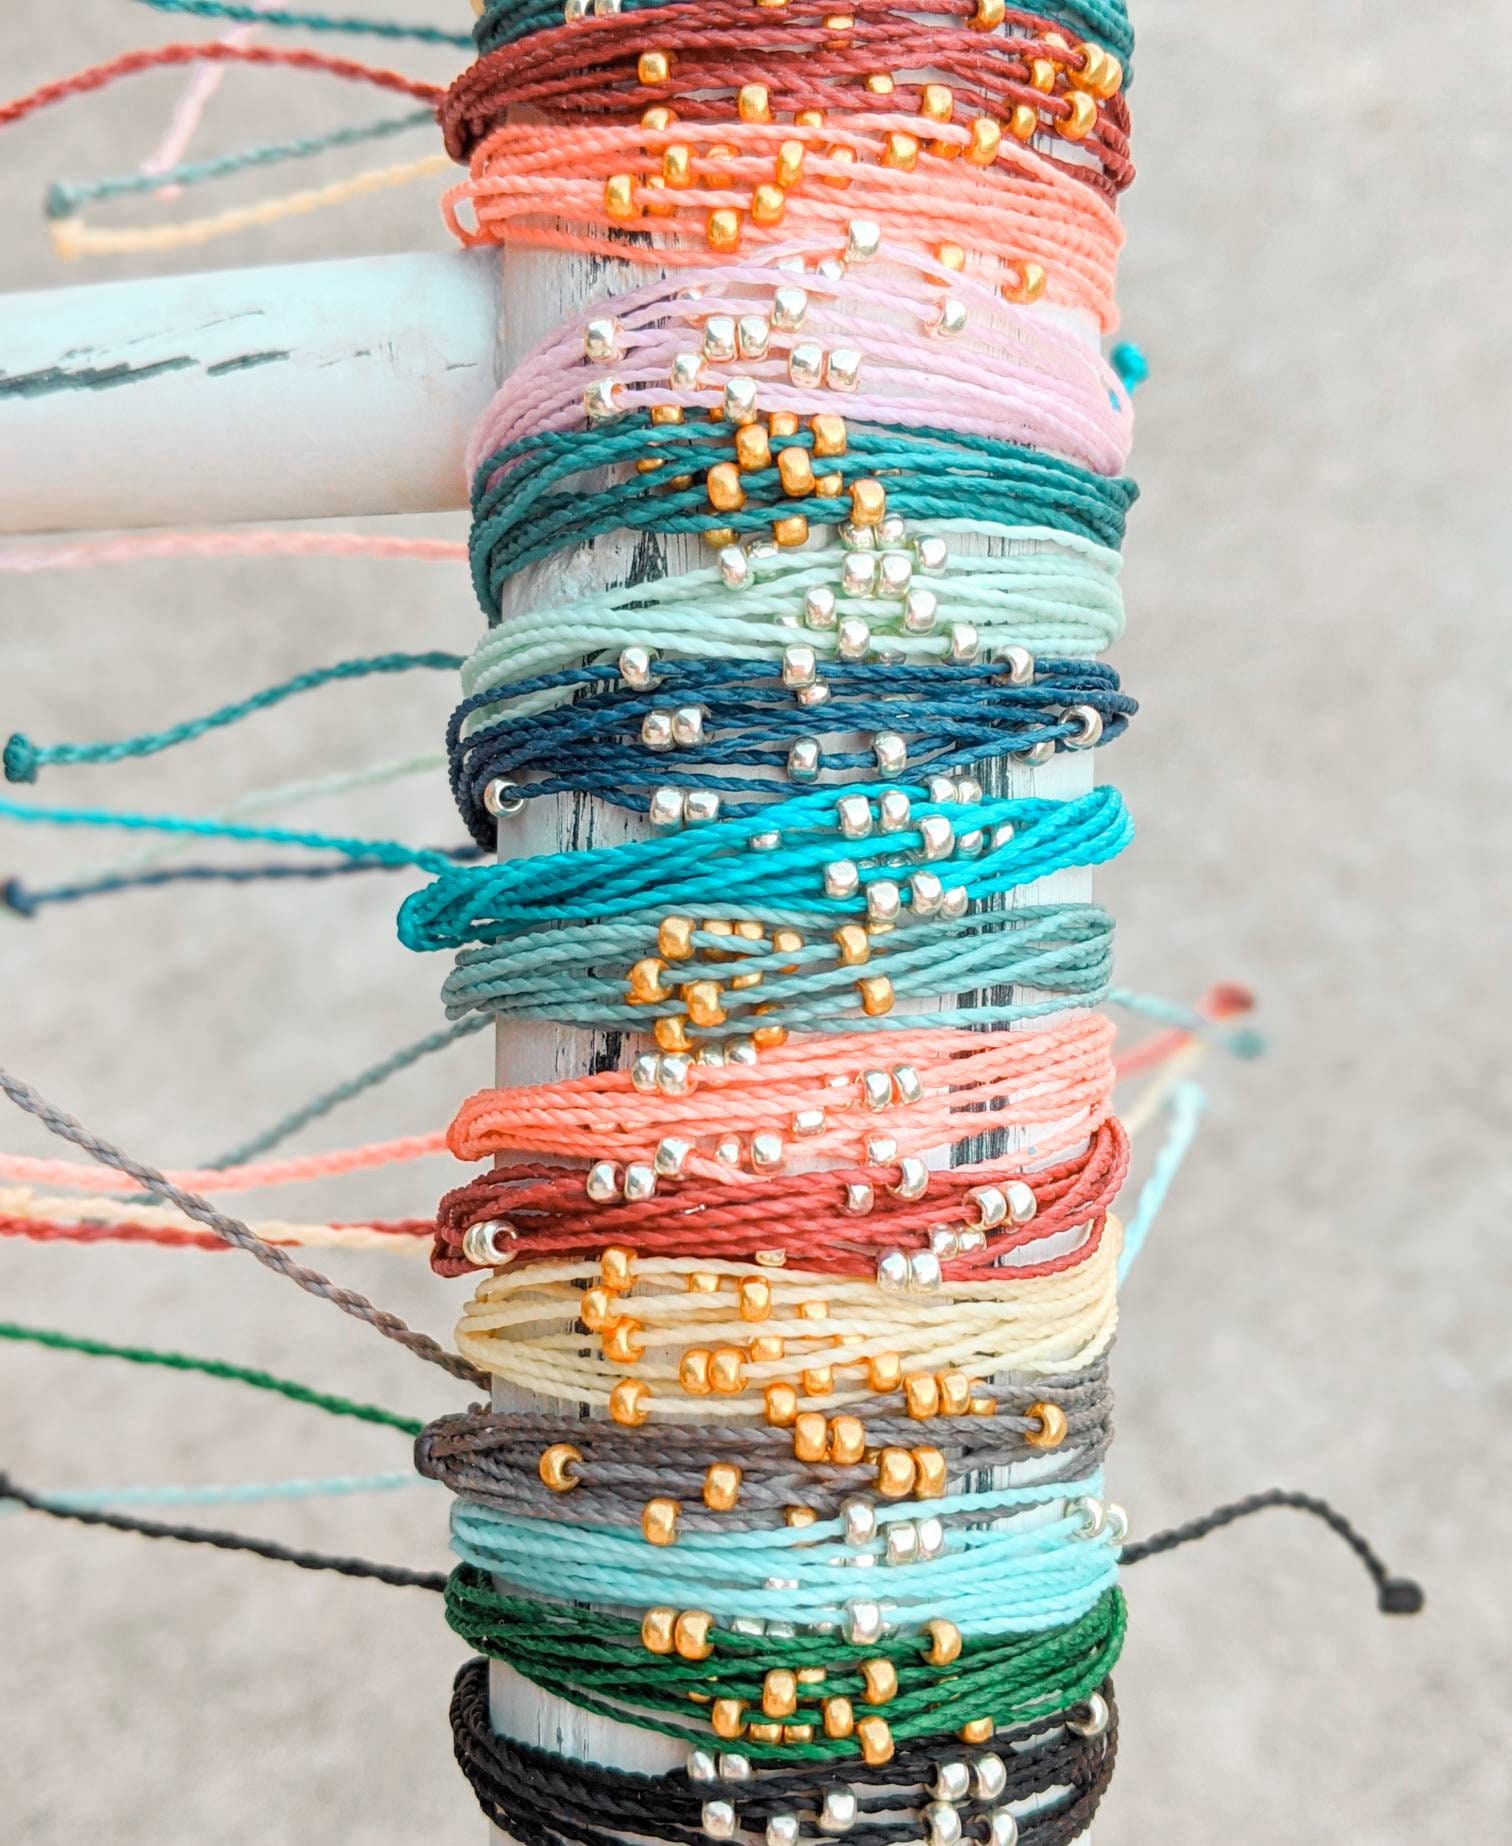 DIY Fashion Wax Cord Bracelet with Flower Beads